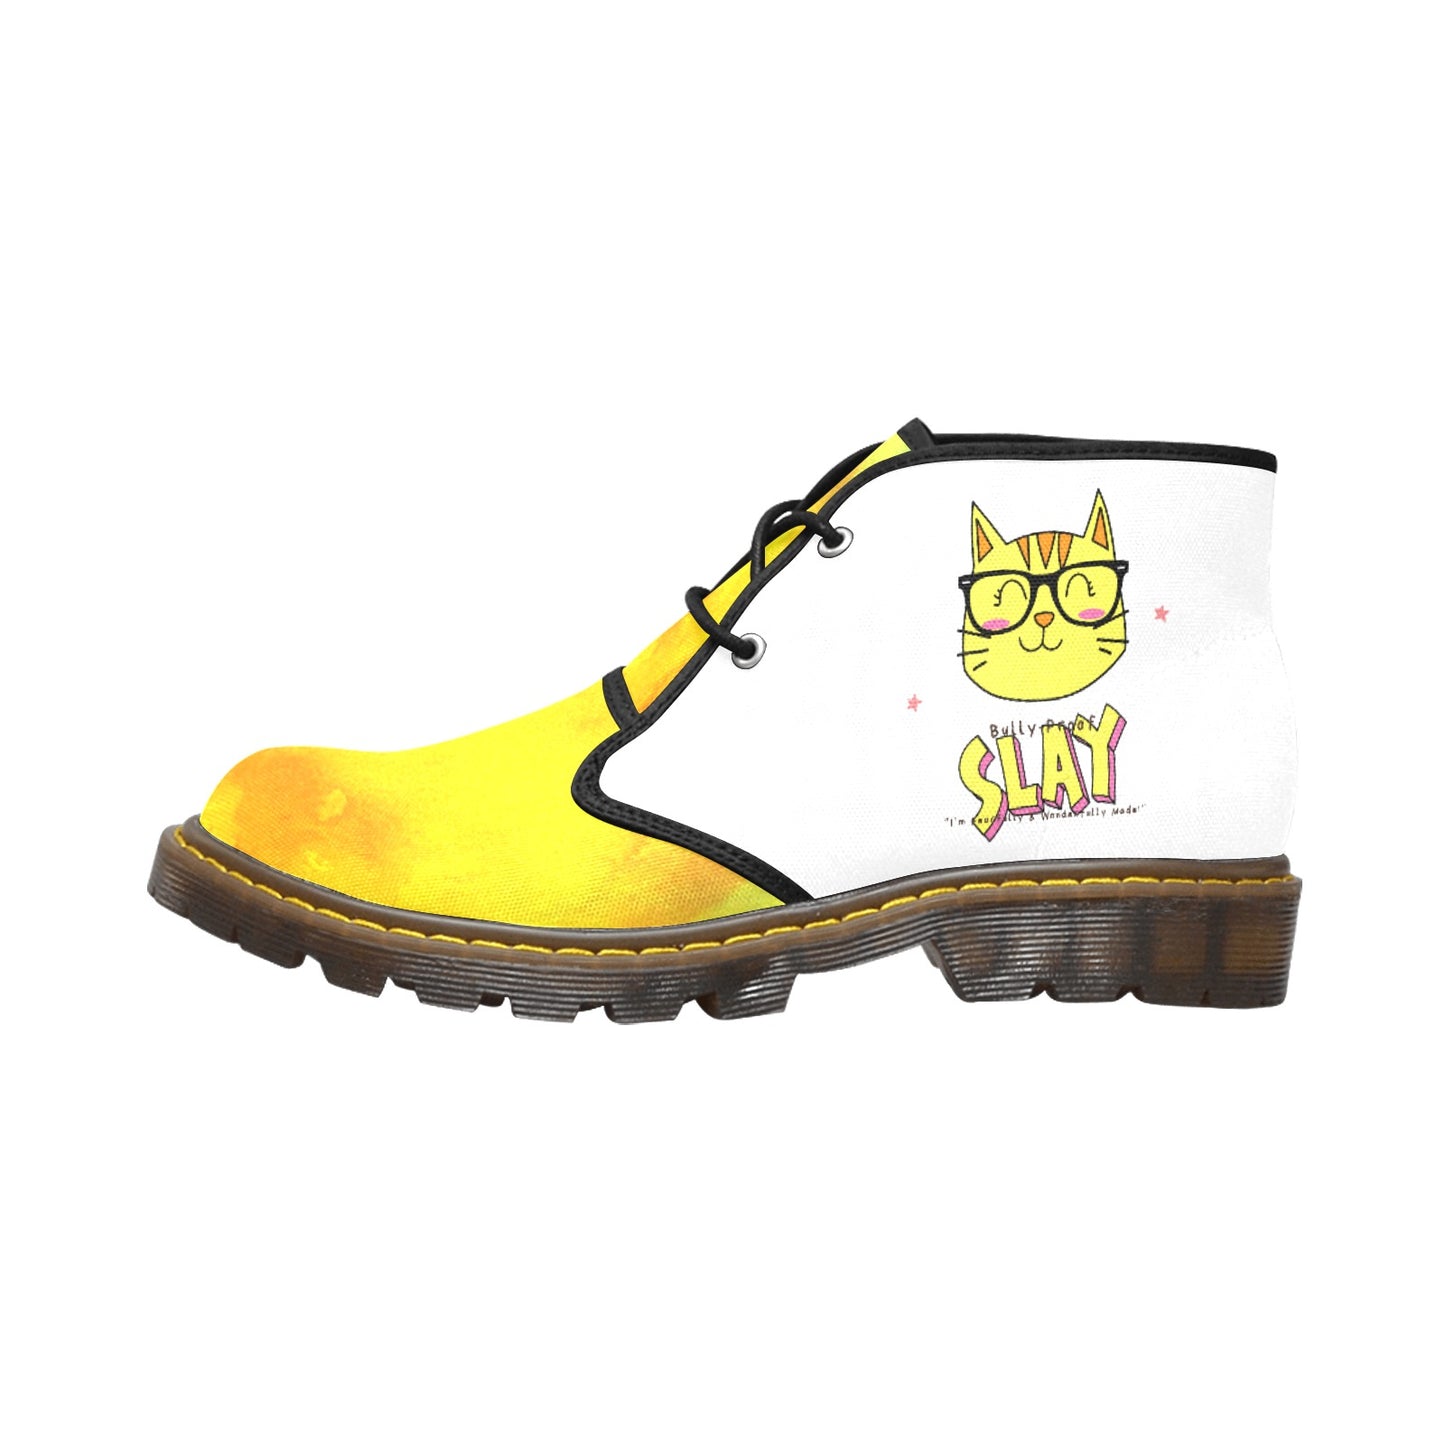 Bully-Proof Da Nerd Kat Slay Men's Canvas Chukka Boots (Model 2402-1)